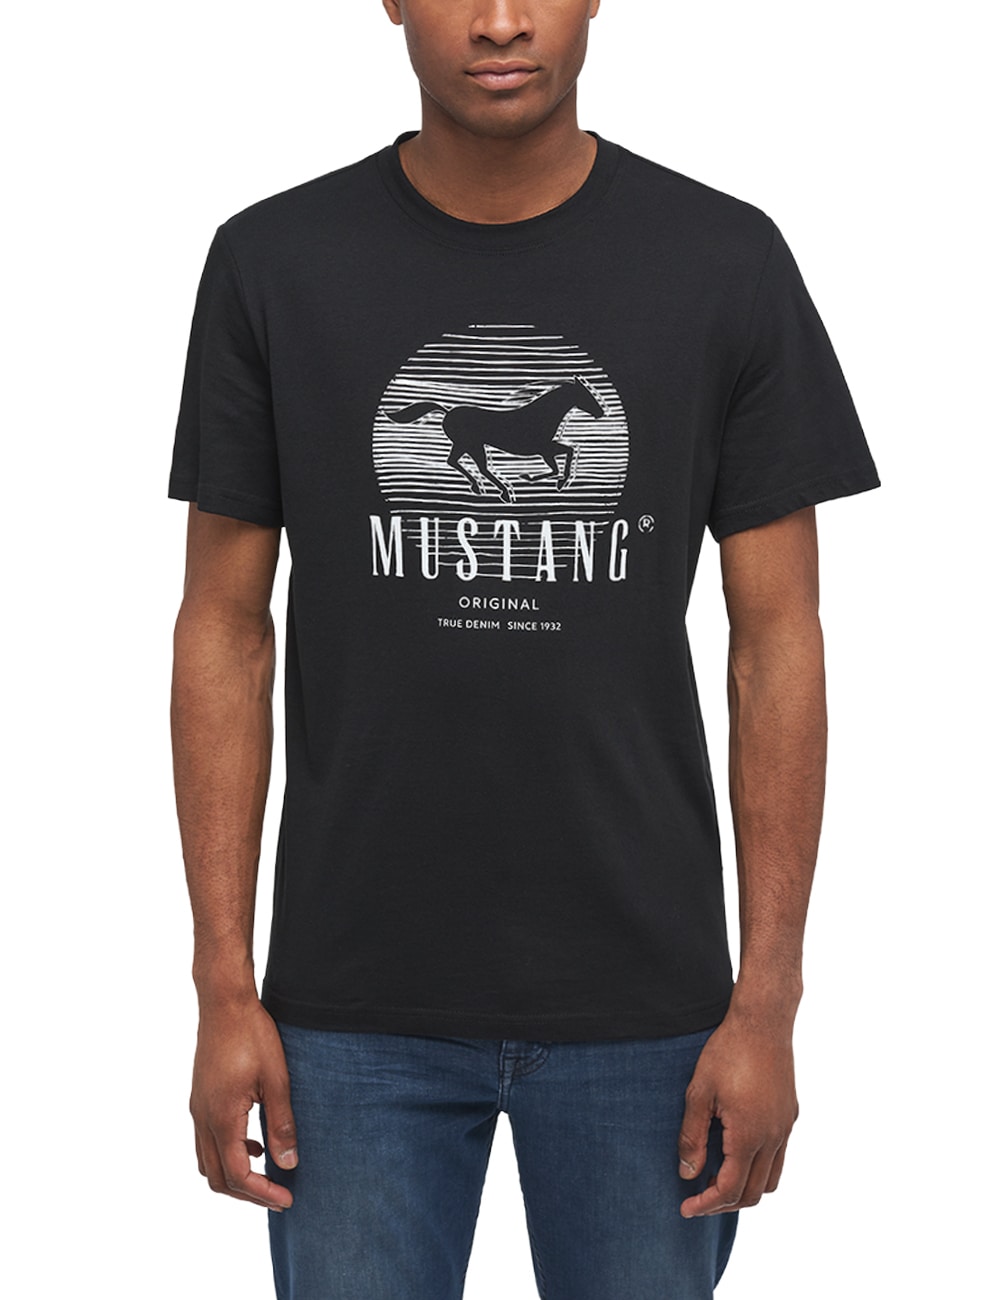 »Mustang T-Shirt kaufen MUSTANG BAUR | Print-Shirt«, T-Shirt T-Shirt ▷ Mustang